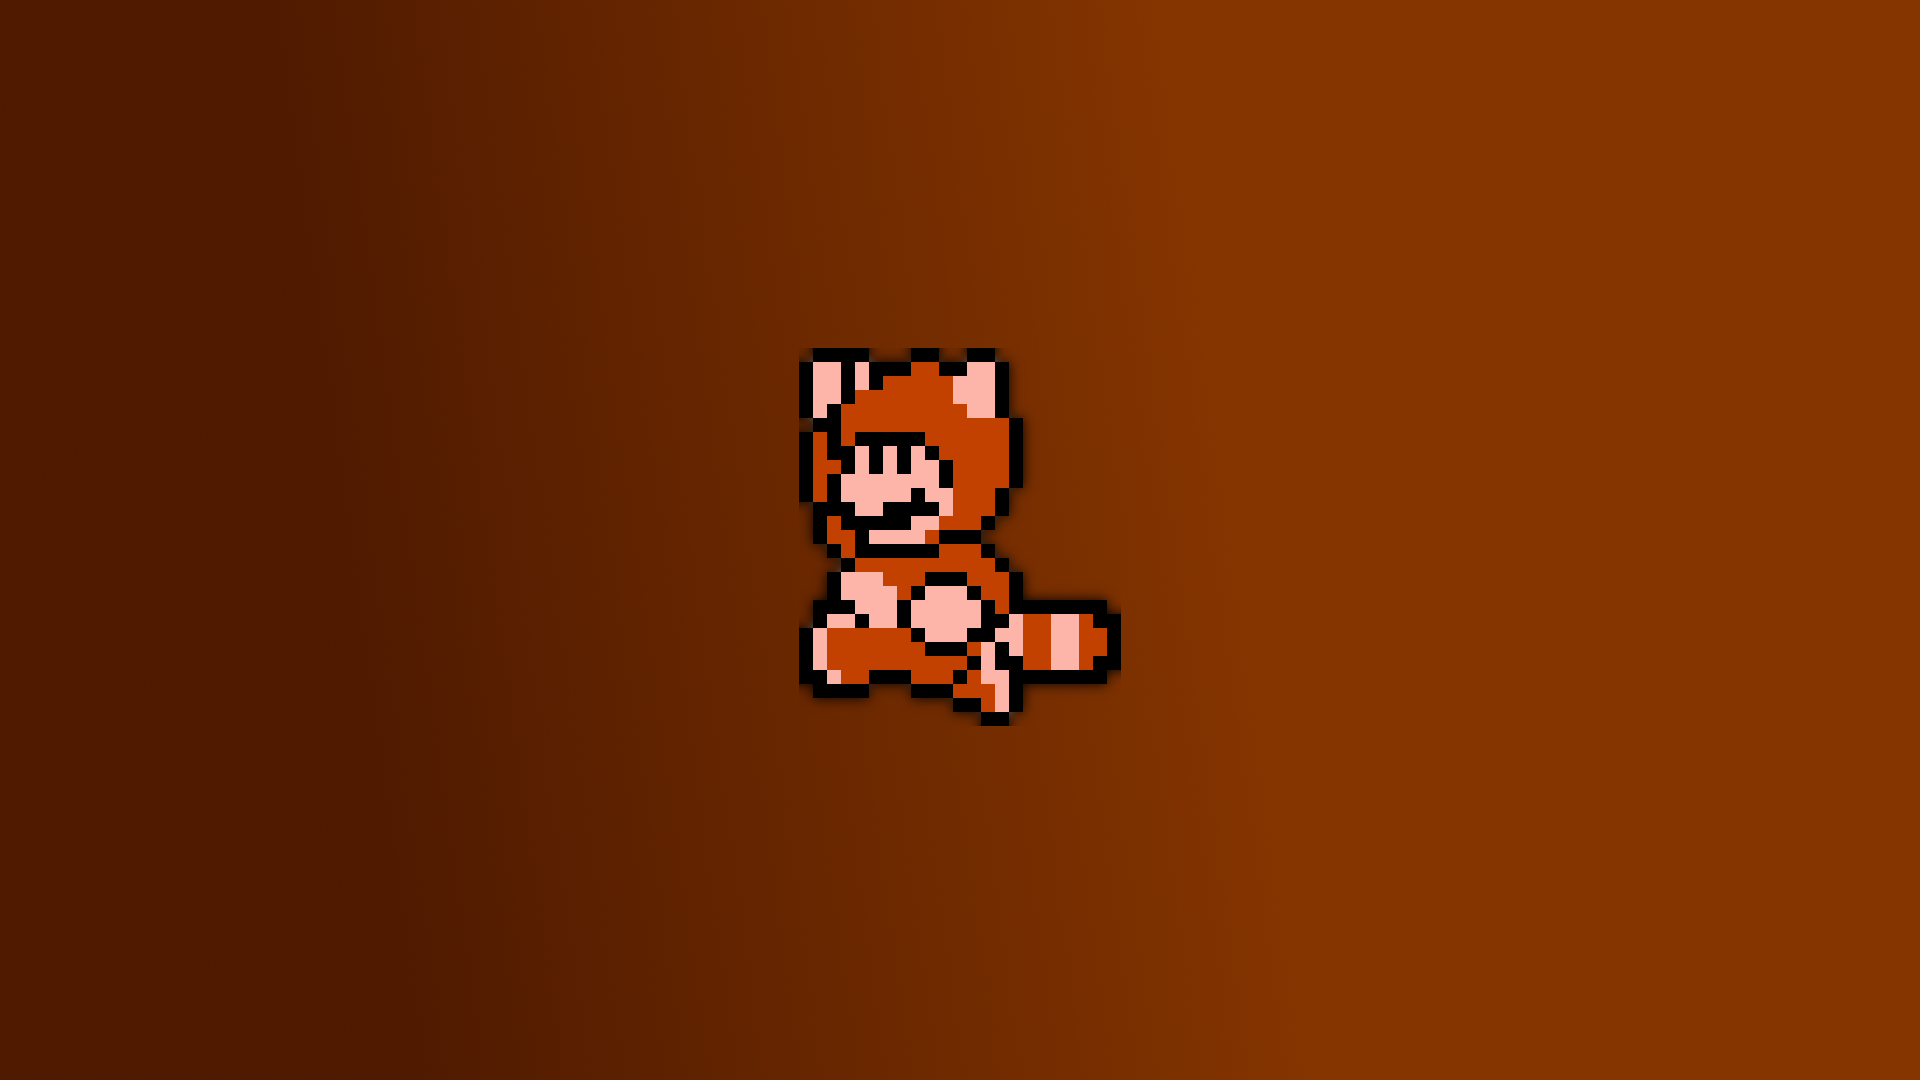 General 1920x1080 cartoon Super Mario tanuki pixel art brown brown background video games Nintendo